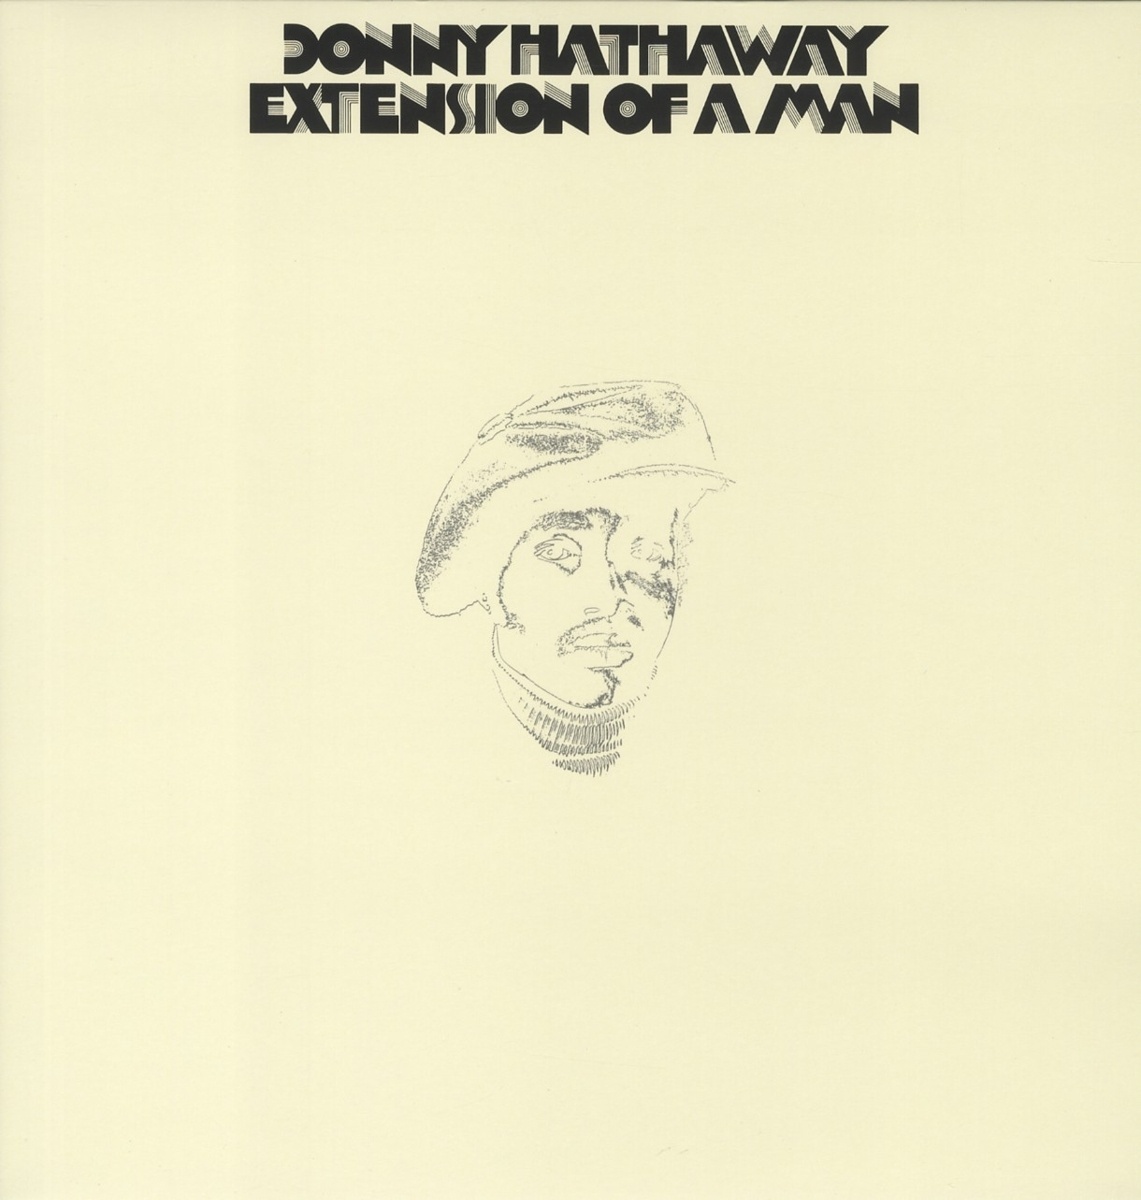 Extension Of A Man (Vinyl) - Donny Hathaway. (LP)